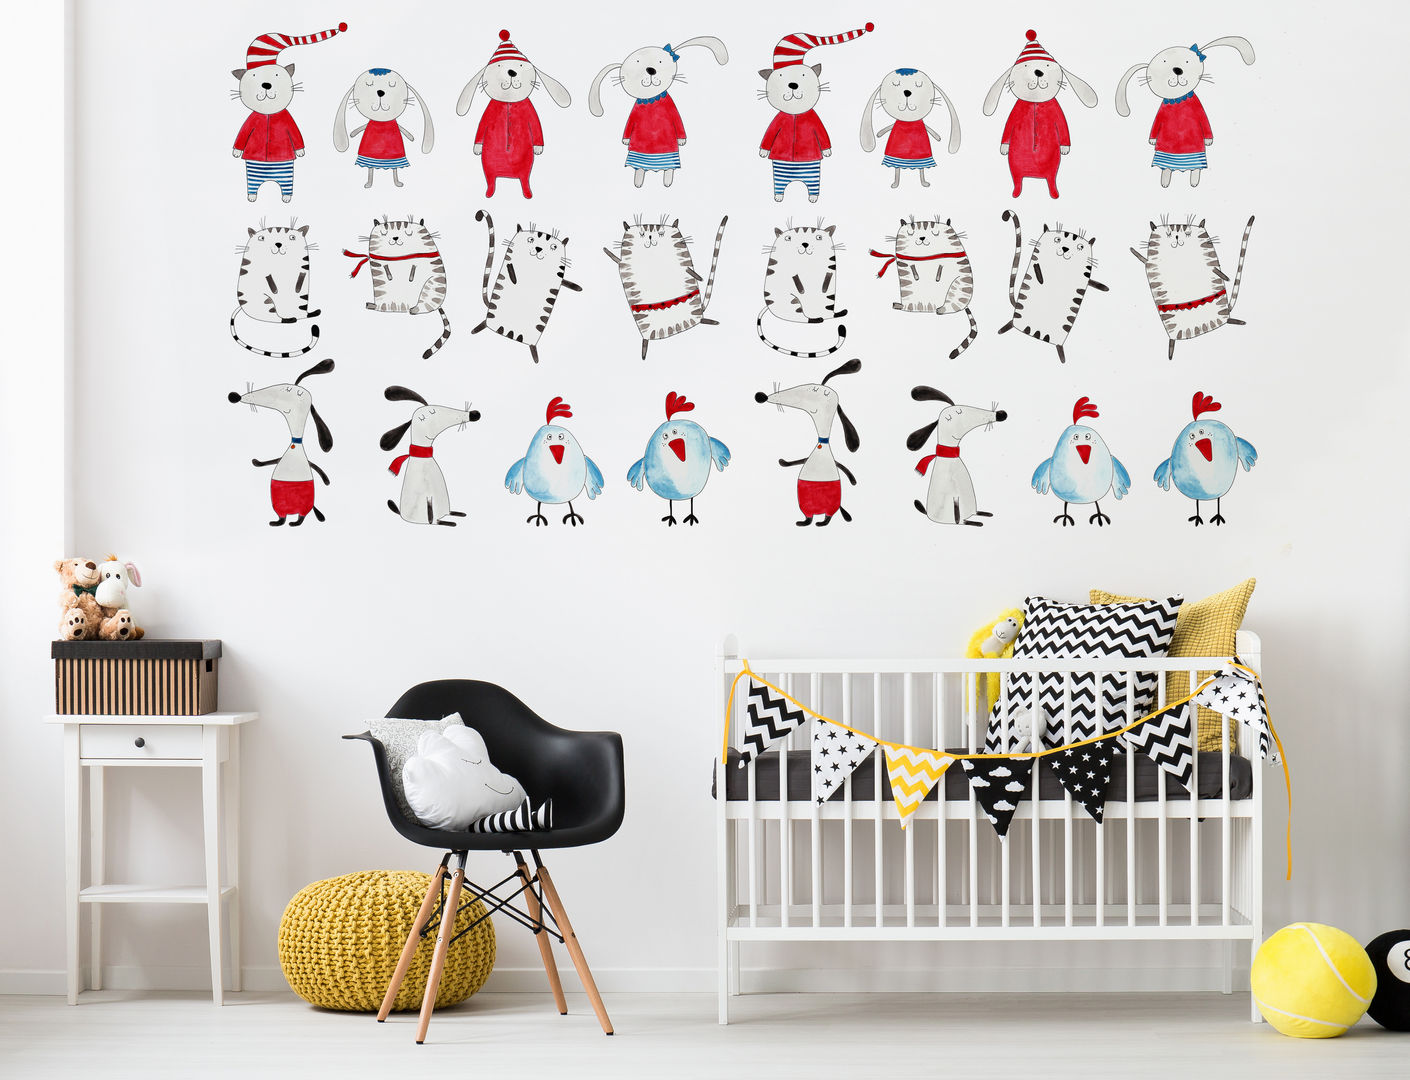 Little Friends Pixers Cuartos infantiles de estilo minimalista wall mural,wallpaper,kid,child,animals,drawing